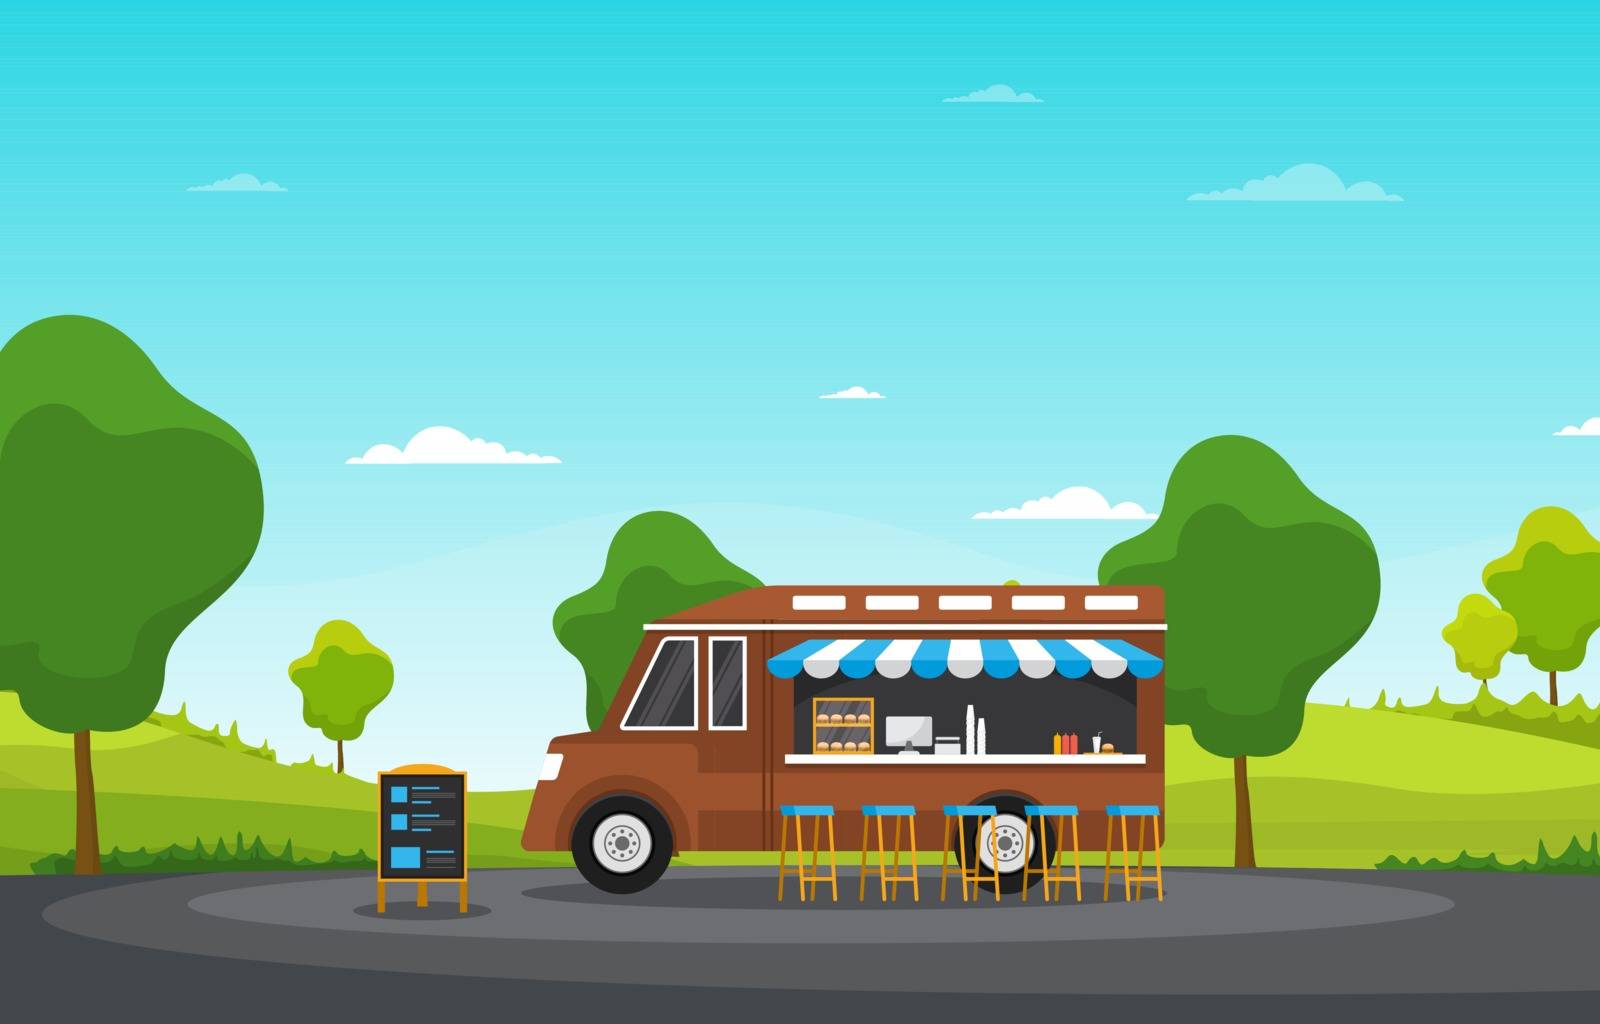 Food Truck Van Car Vehicle Street Shop Park Illustration by jongcreative